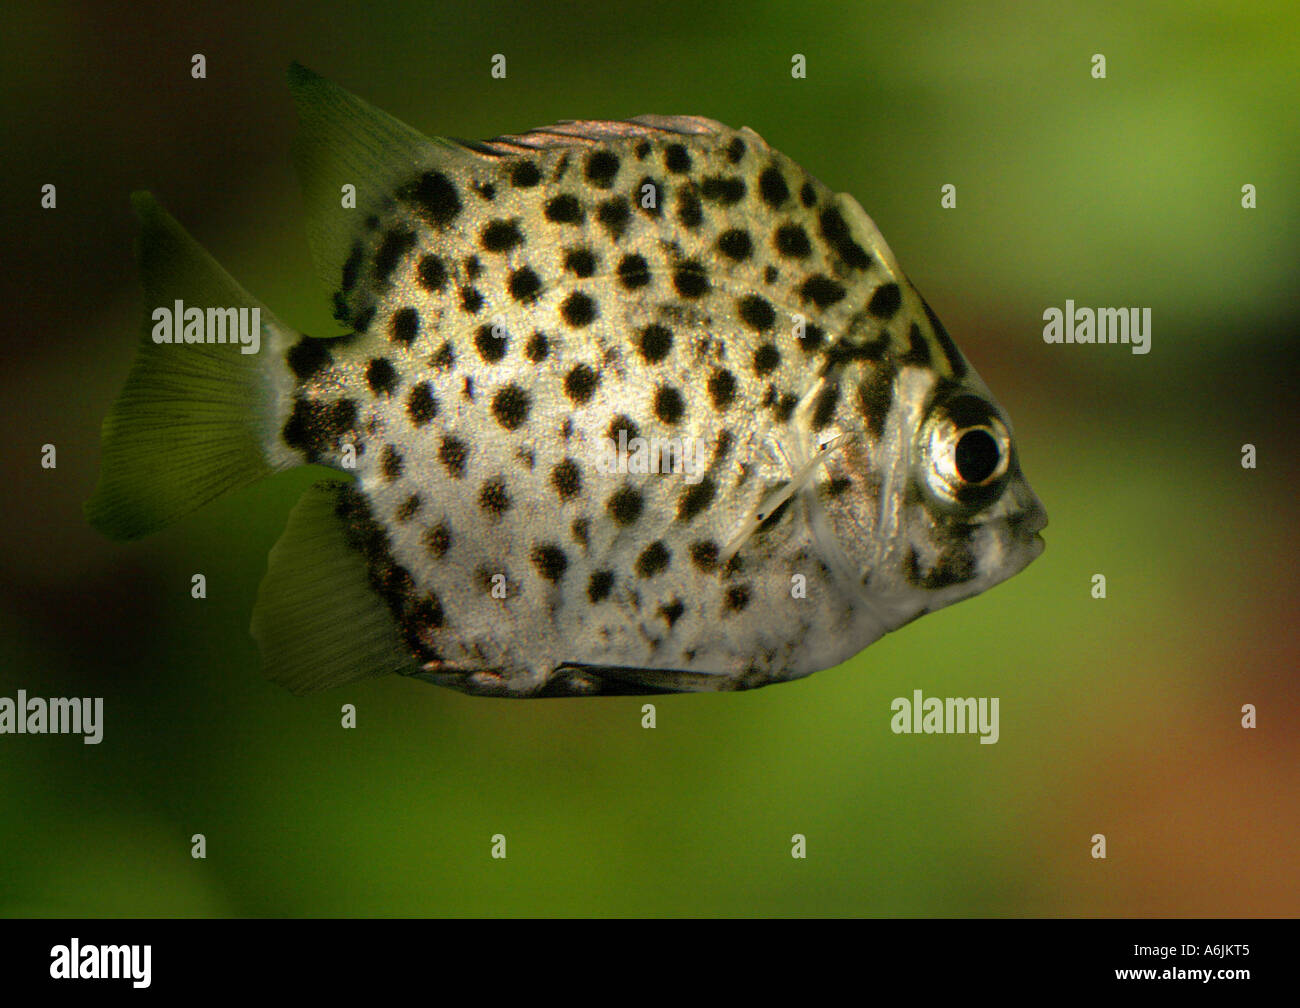 scat, argusfish, argus fish, spotted cat (Scatophagus argus argus) Stock Photo